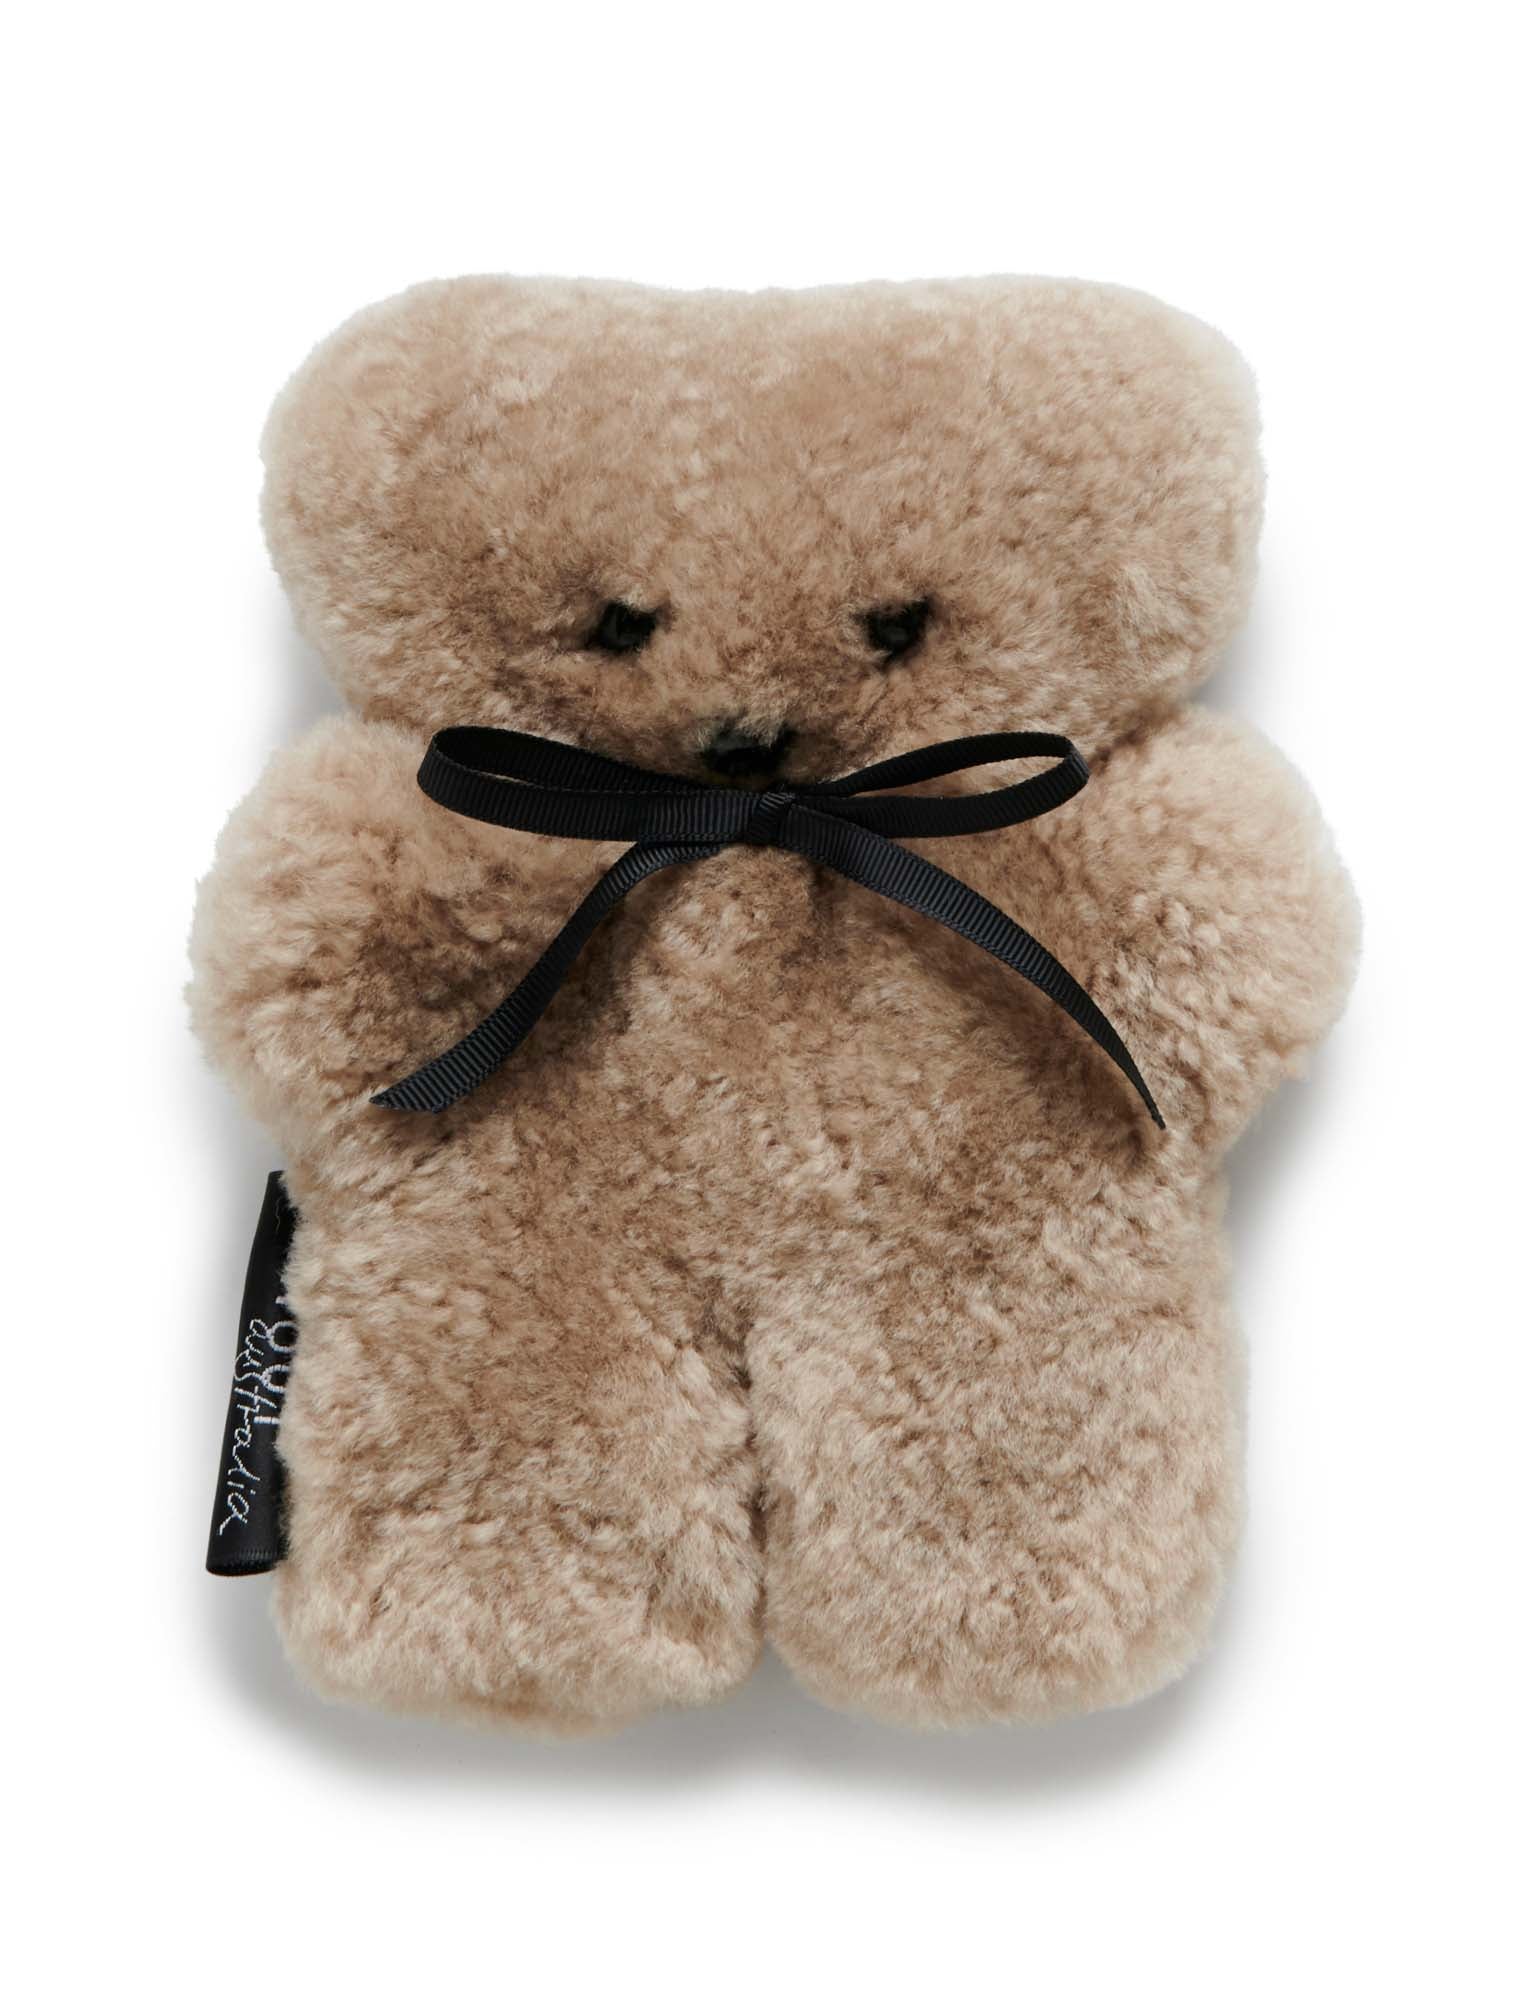 Benefits of Having a Teddy Bear - FLATOUTbear